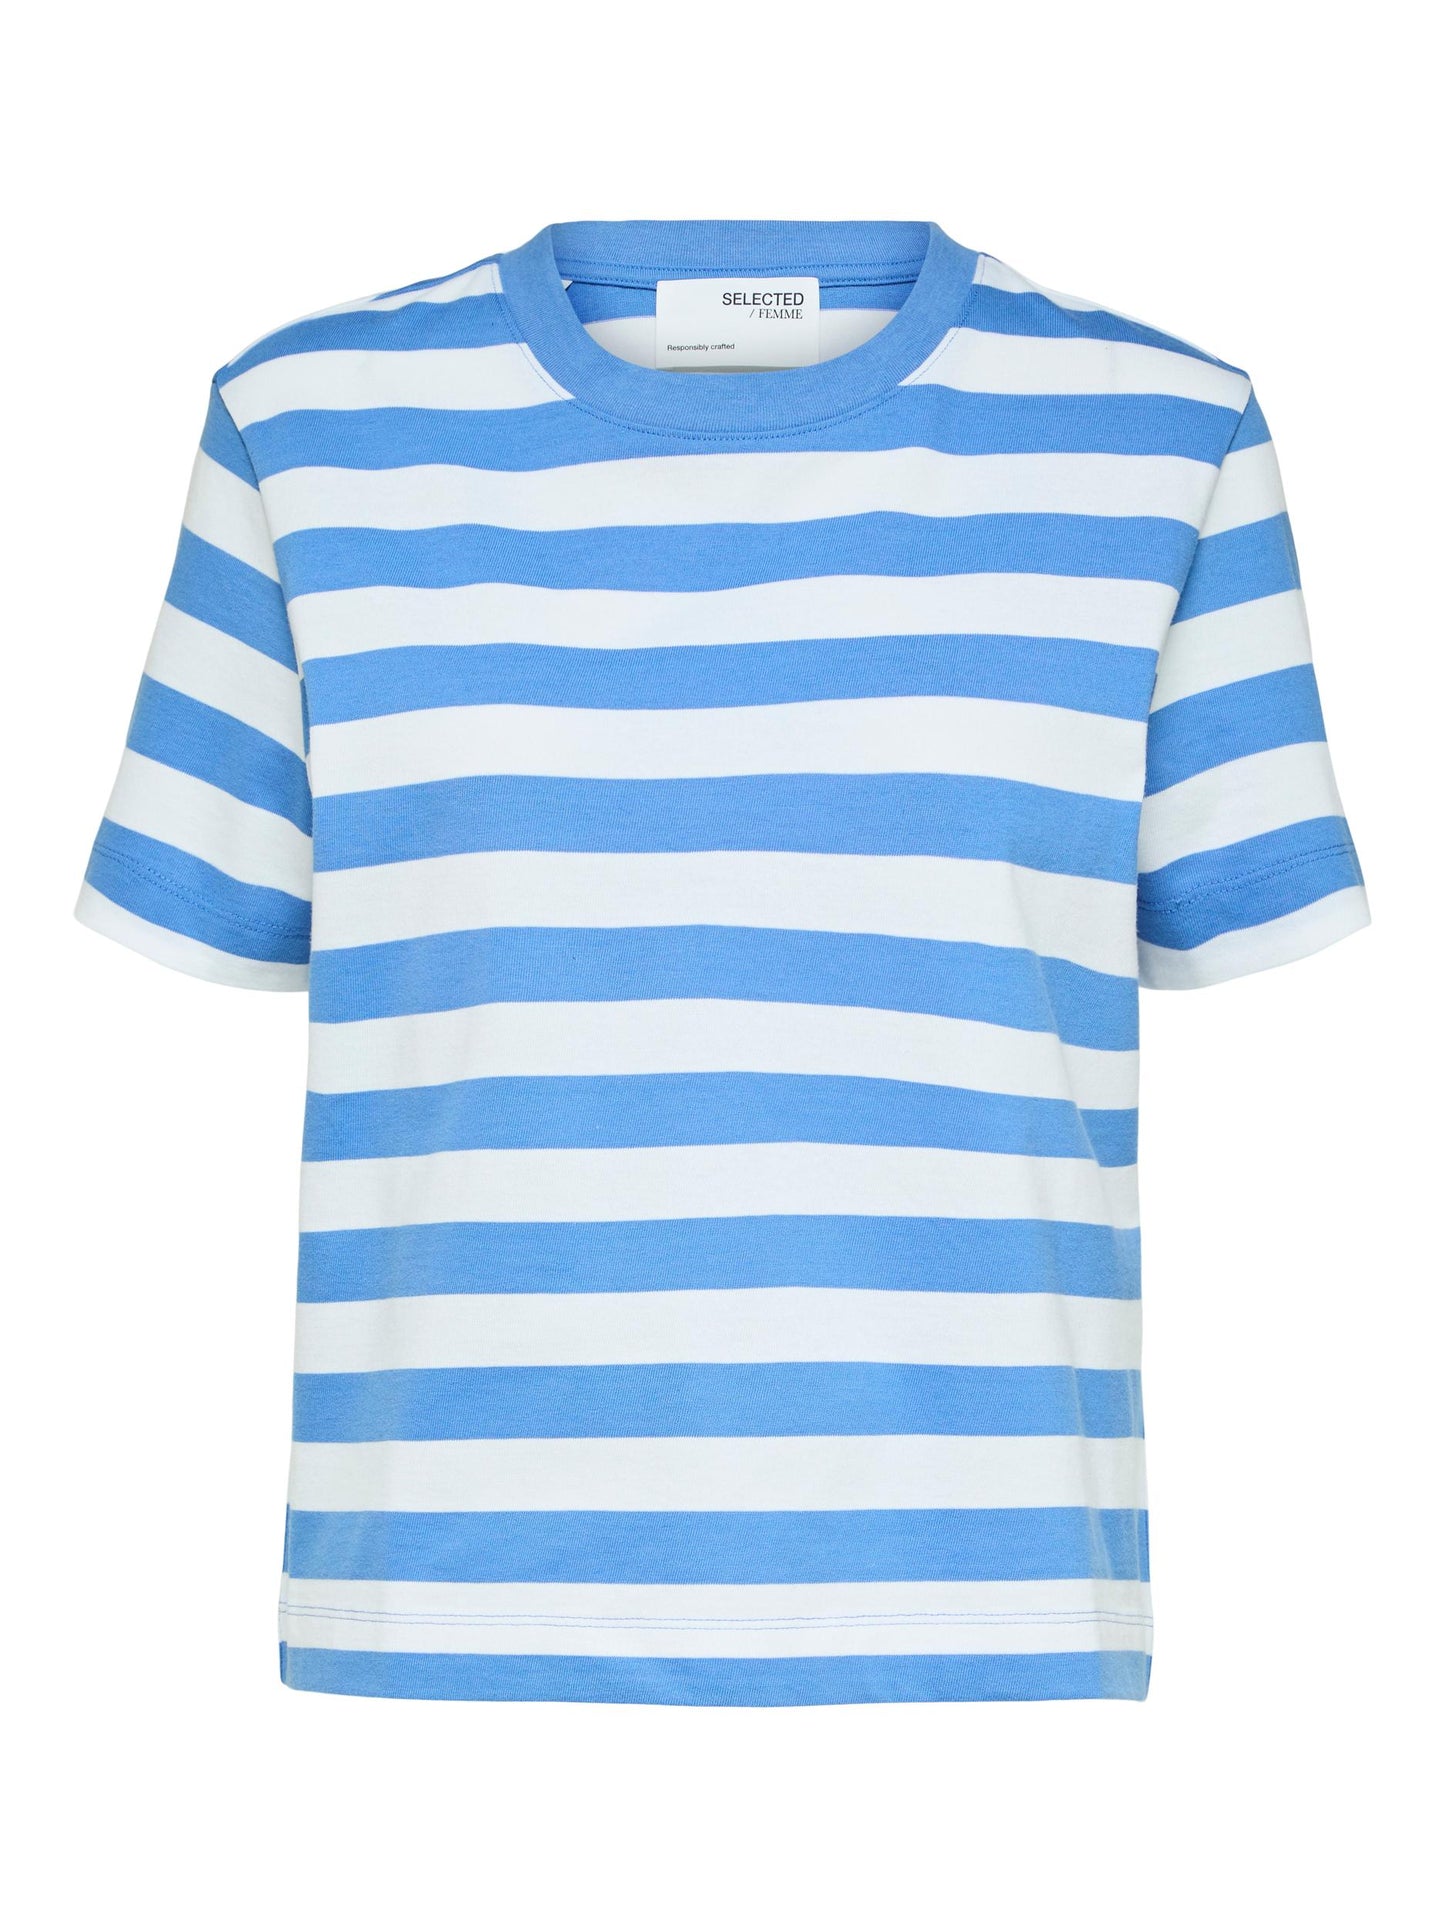 
                  
                    SLFESSENTIAL Ultramarinblaues, hellweiß gestreiftes, kastenförmiges T-Shirt
                  
                